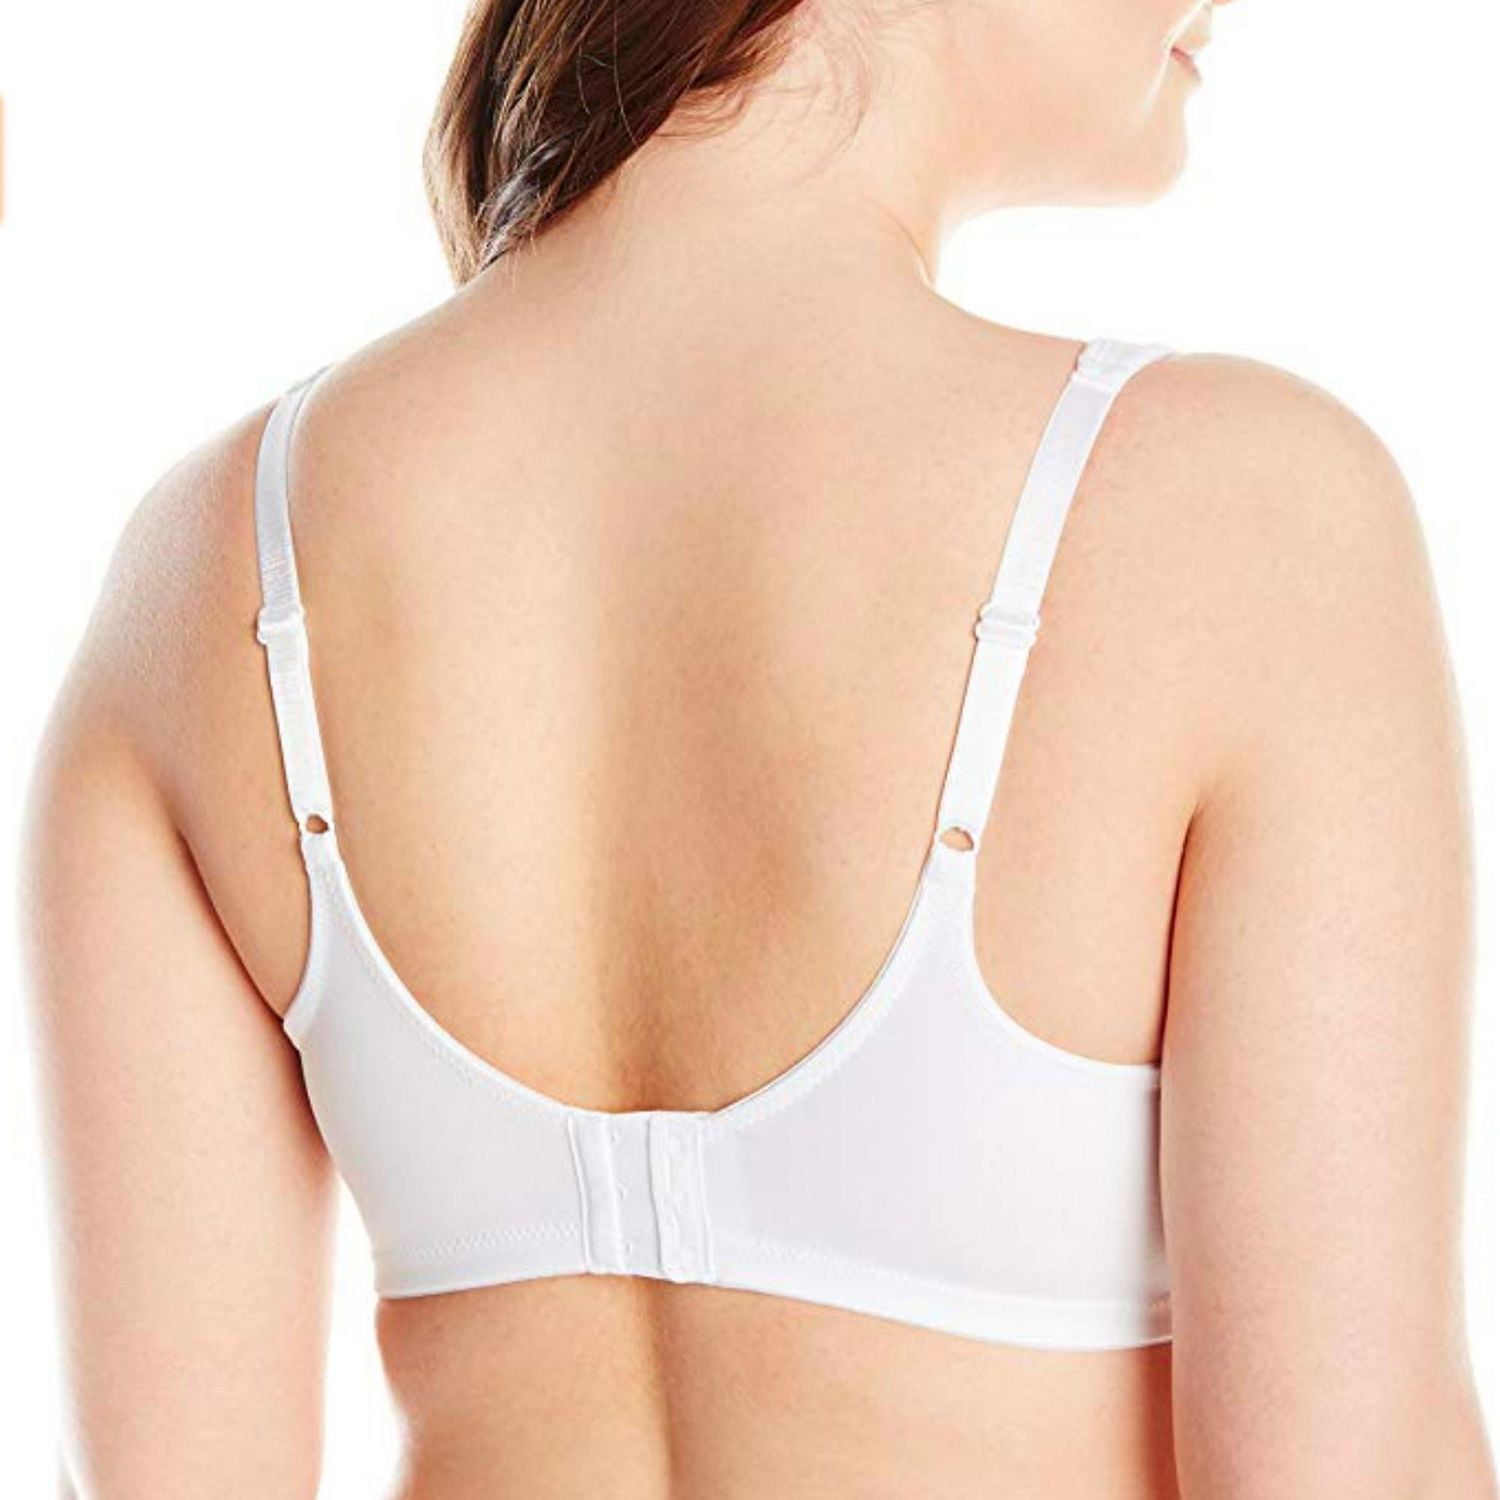 Exquisite Form NWOT 42DD  Support bras, Full figured women, Cotton elastic